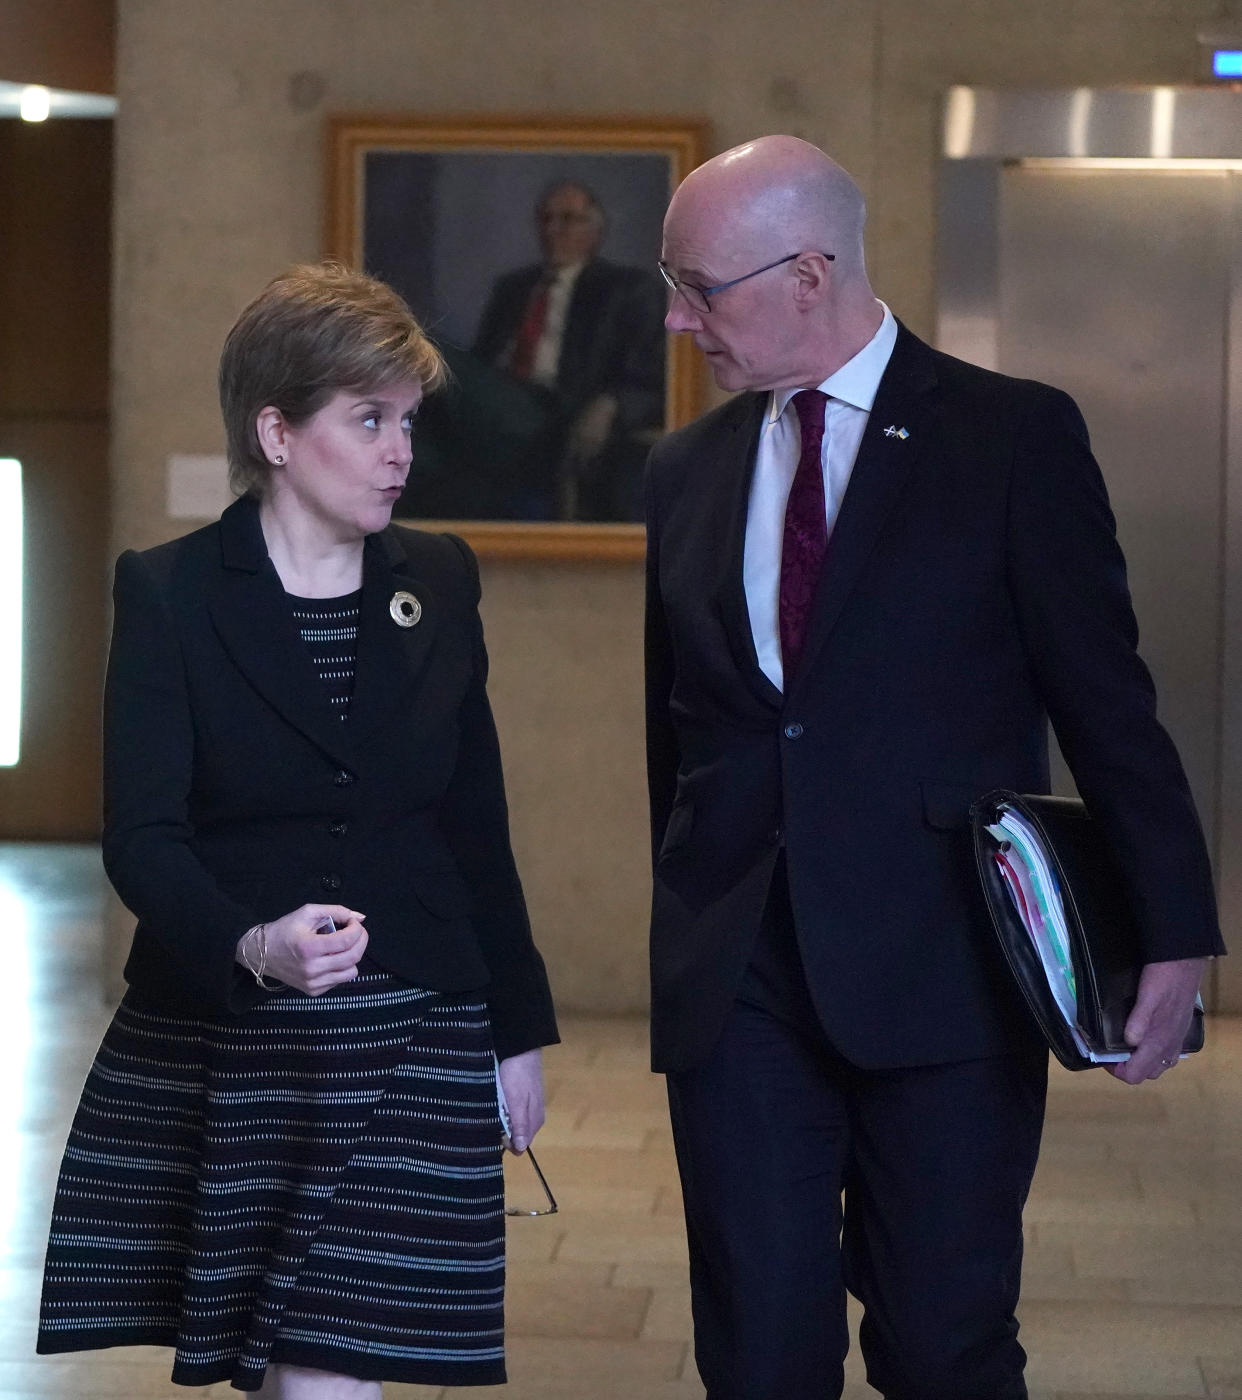 John Swinney has been Nicola Sturgeon’s Deputy First Minister since she took on the top job in Scottish politics in 2014 (Andrew Milligan/PA)